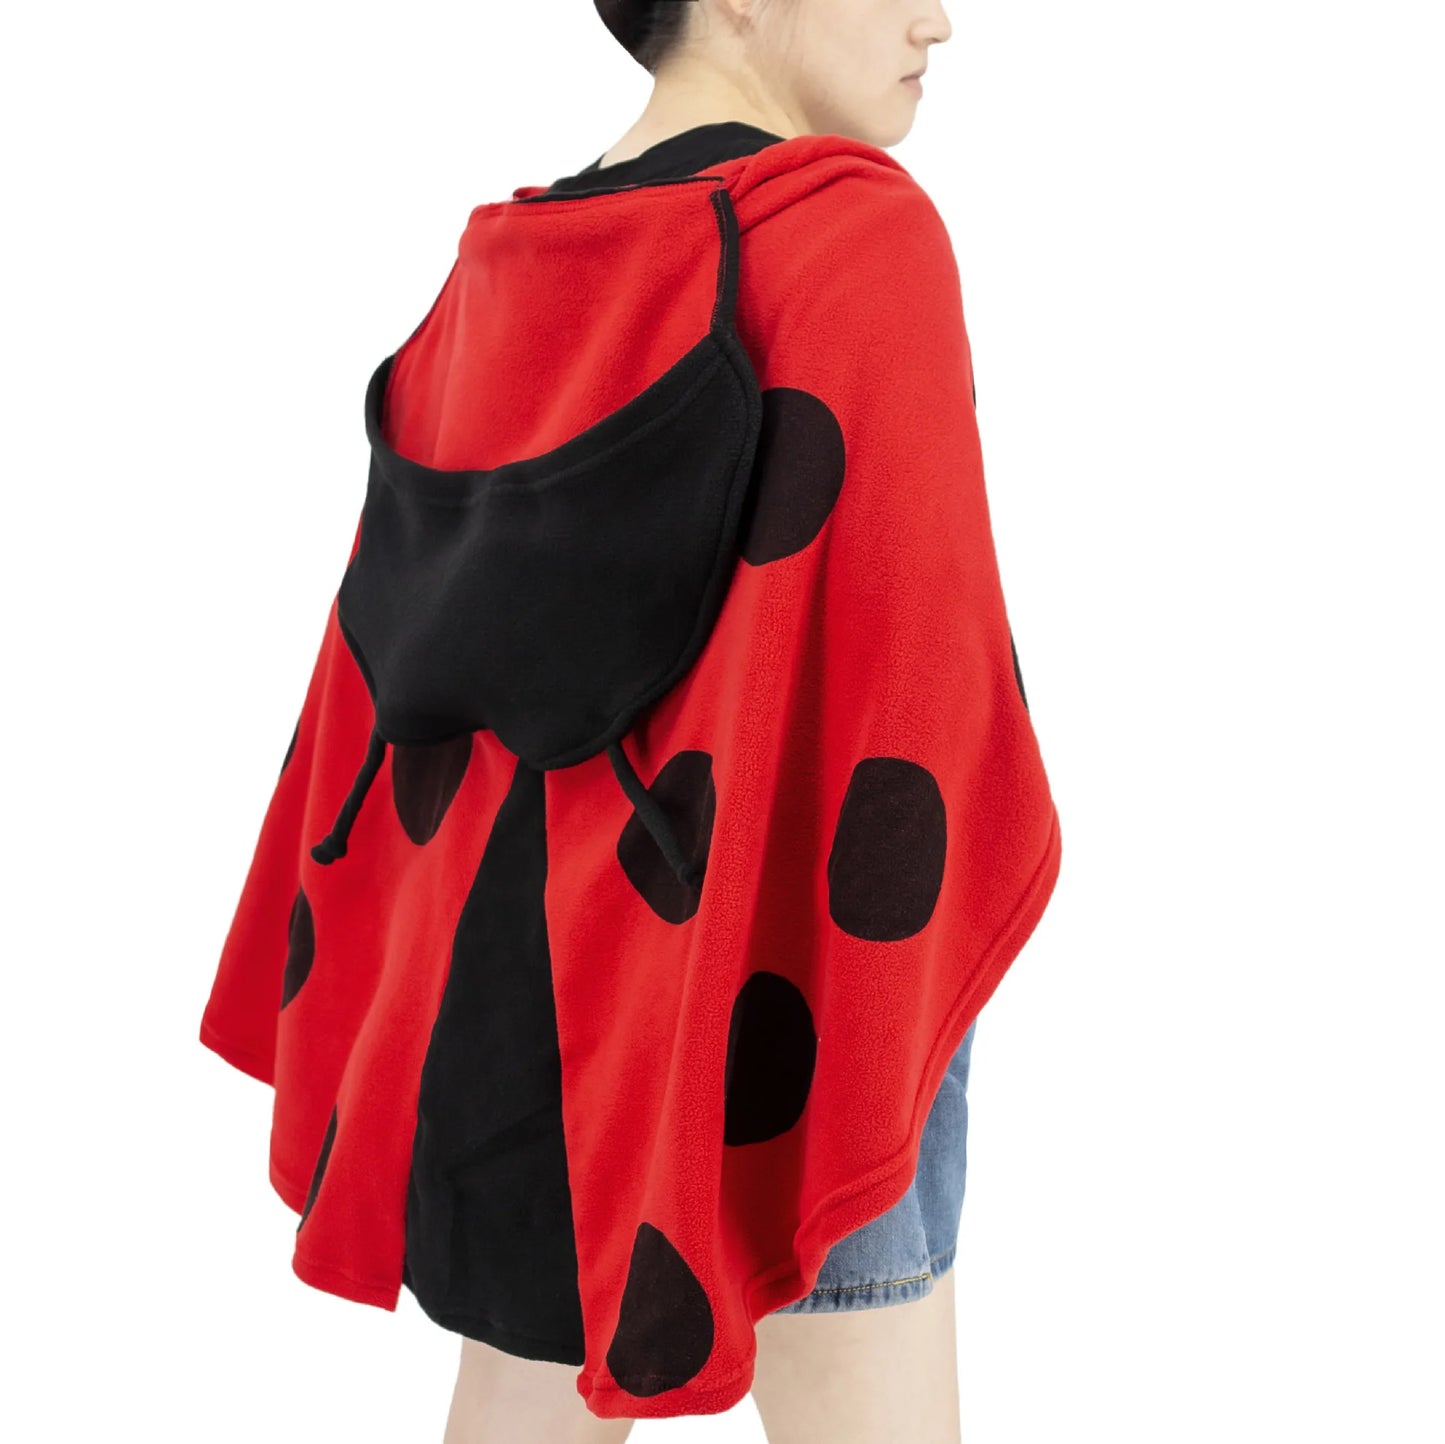 Cute Ladybird Cape Cosplay Lady Beetle Red Cloak Halloween Costumes